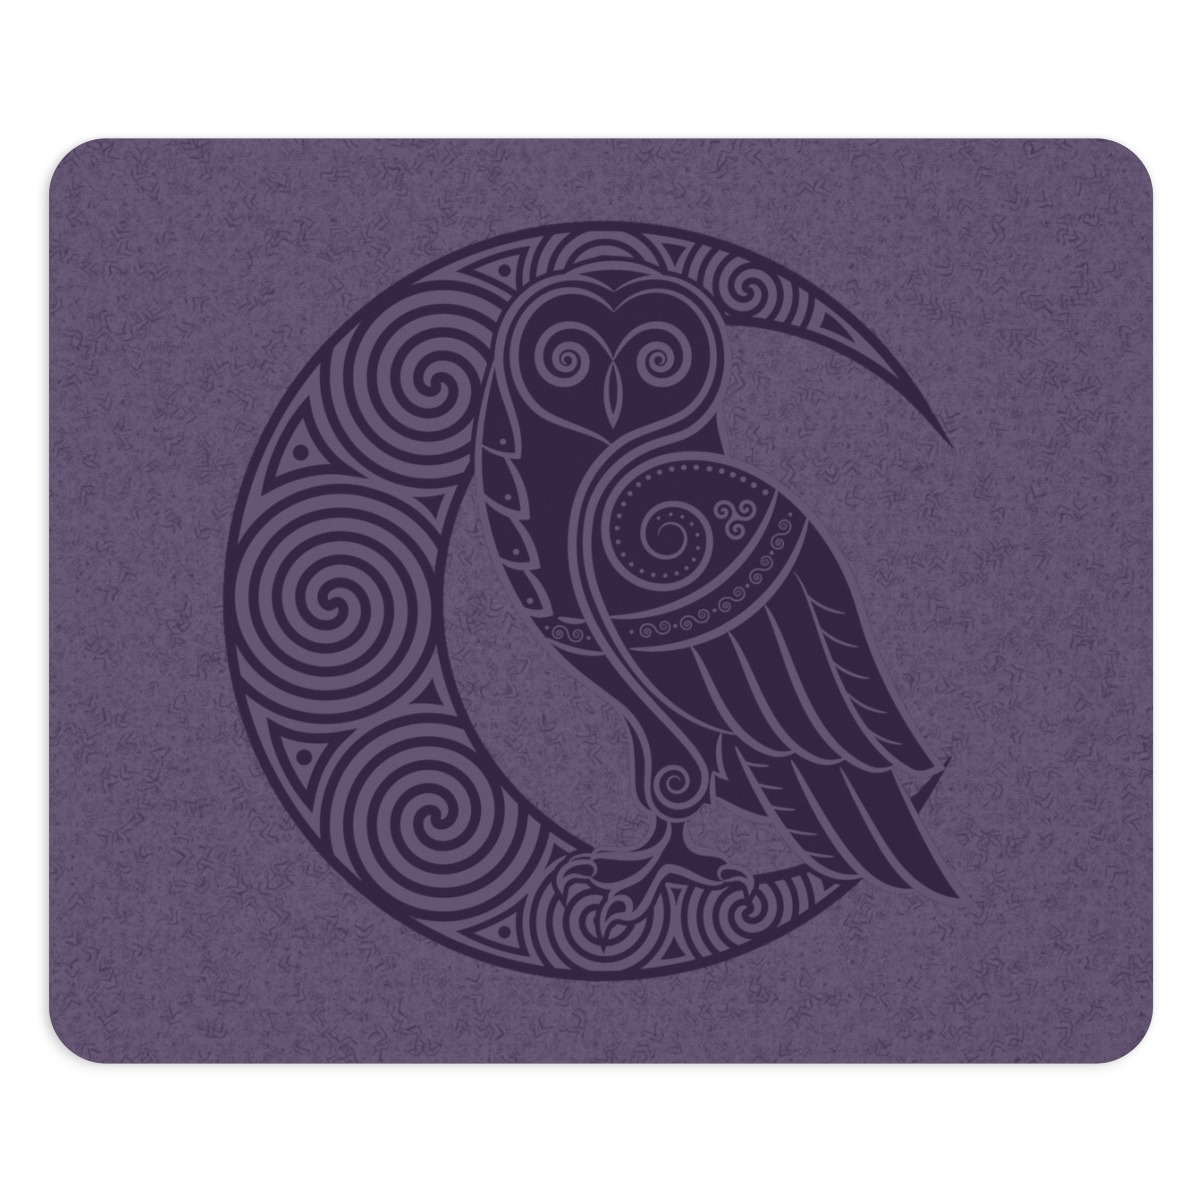 Purple Celtic Owl Moon Mouse Pad